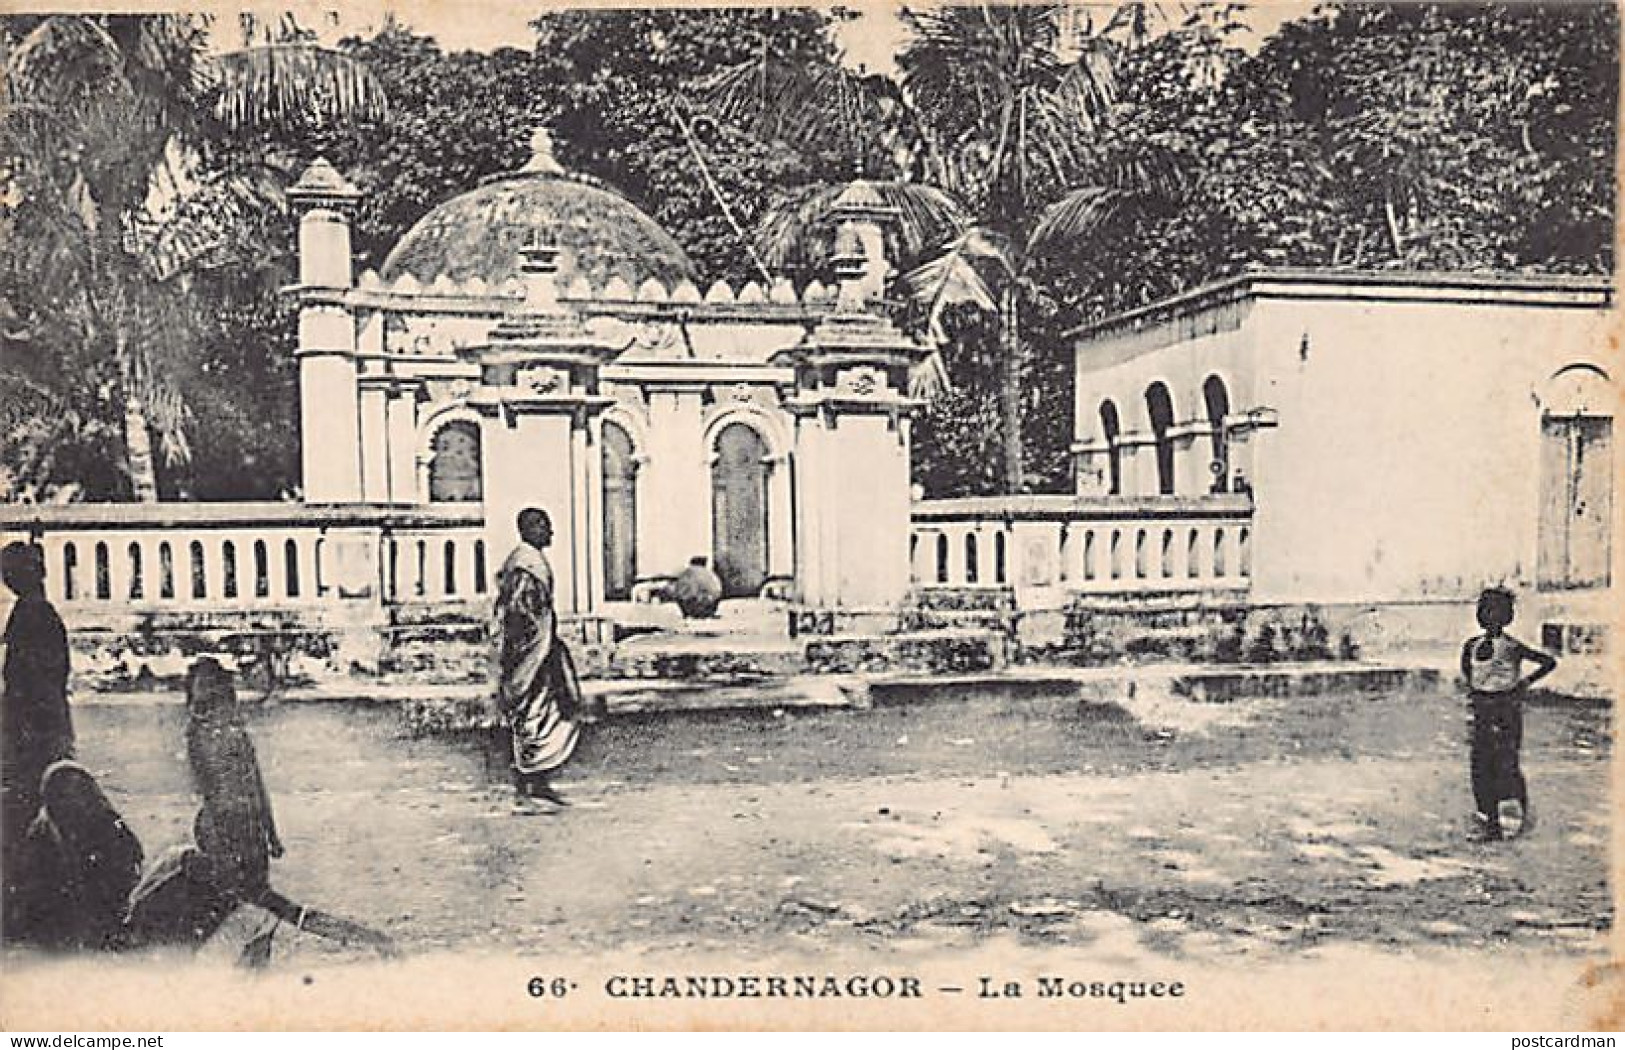 India - CHANDERNAGOR Chandannagar - The Mosque - Publ. Messageries Maritimes 66 - Inde